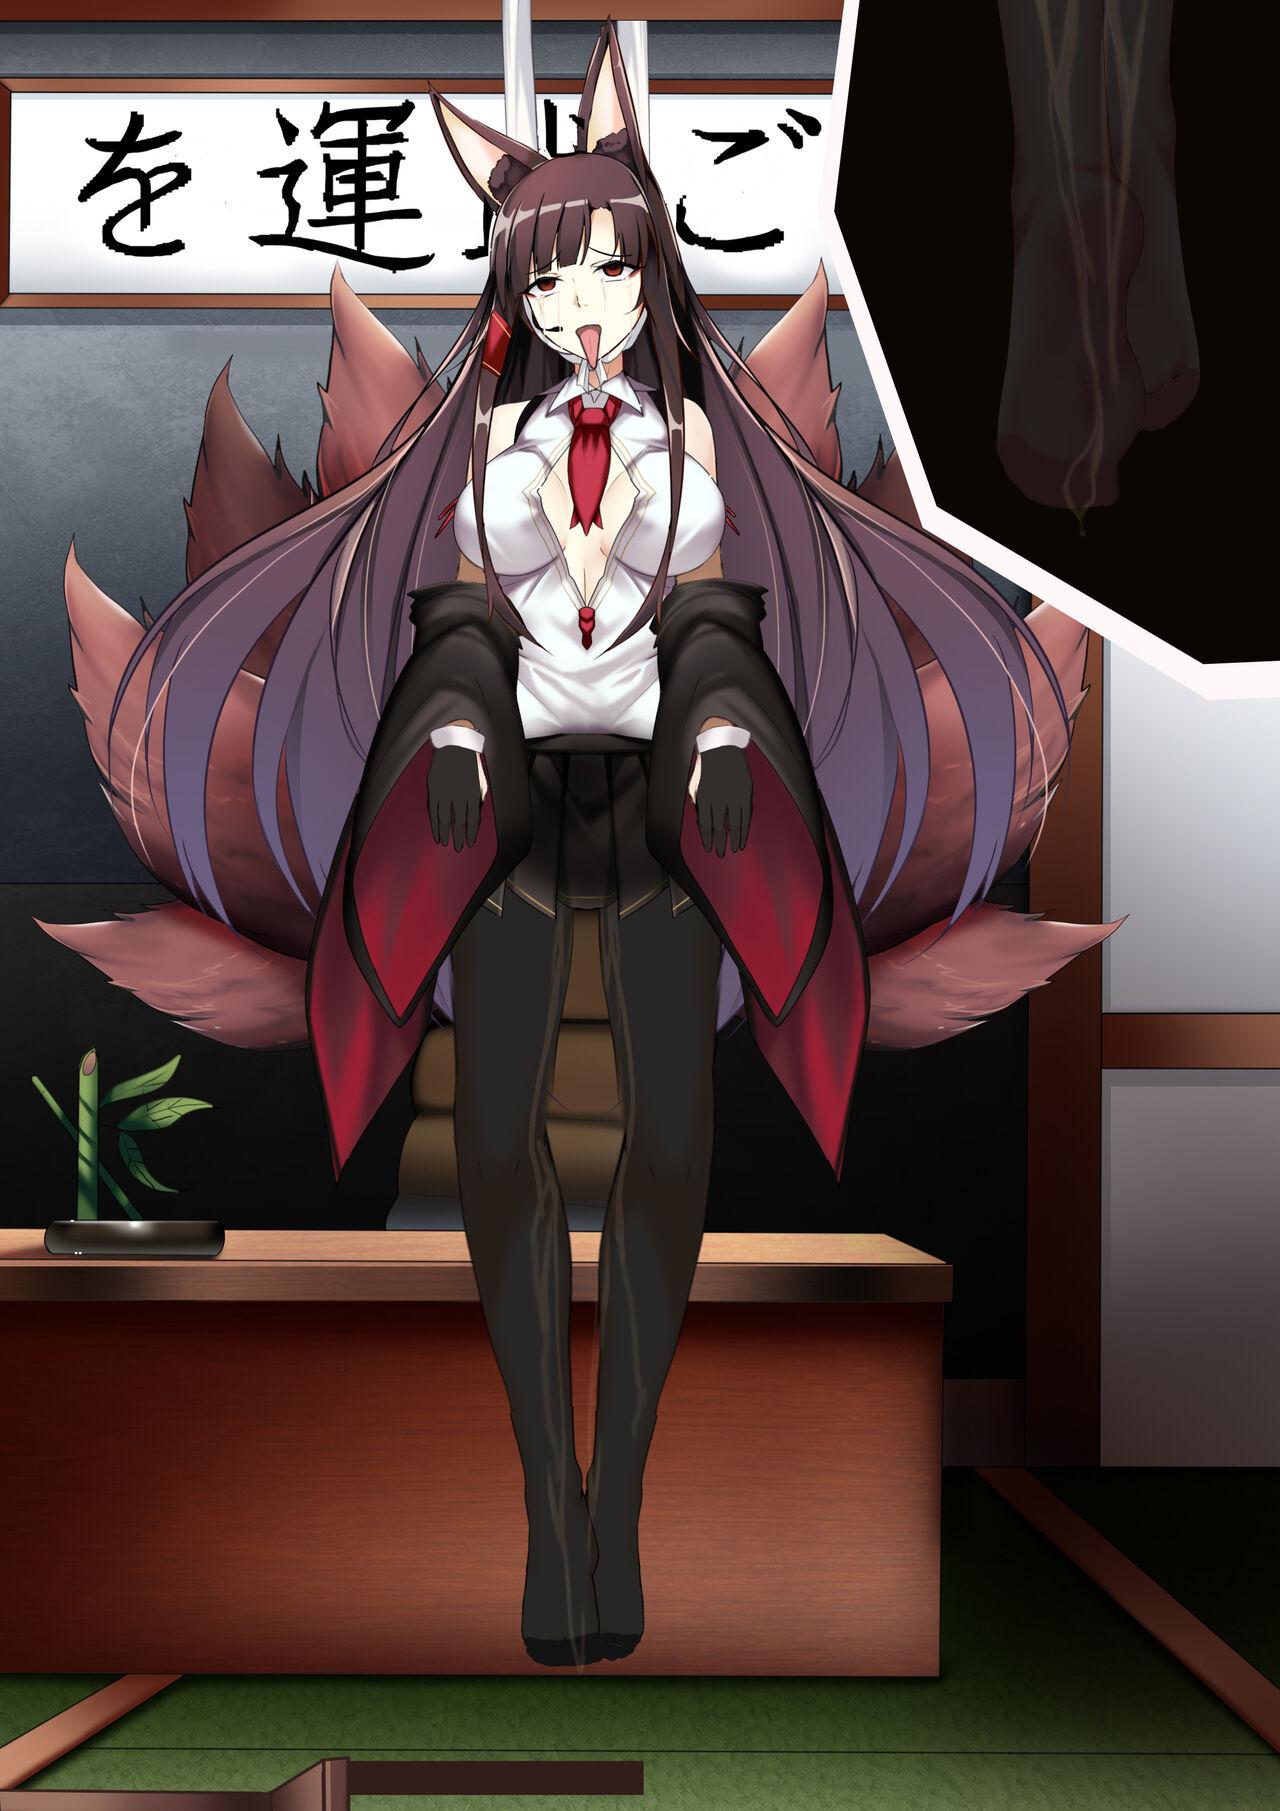 Akagi hanged herself in her office 44